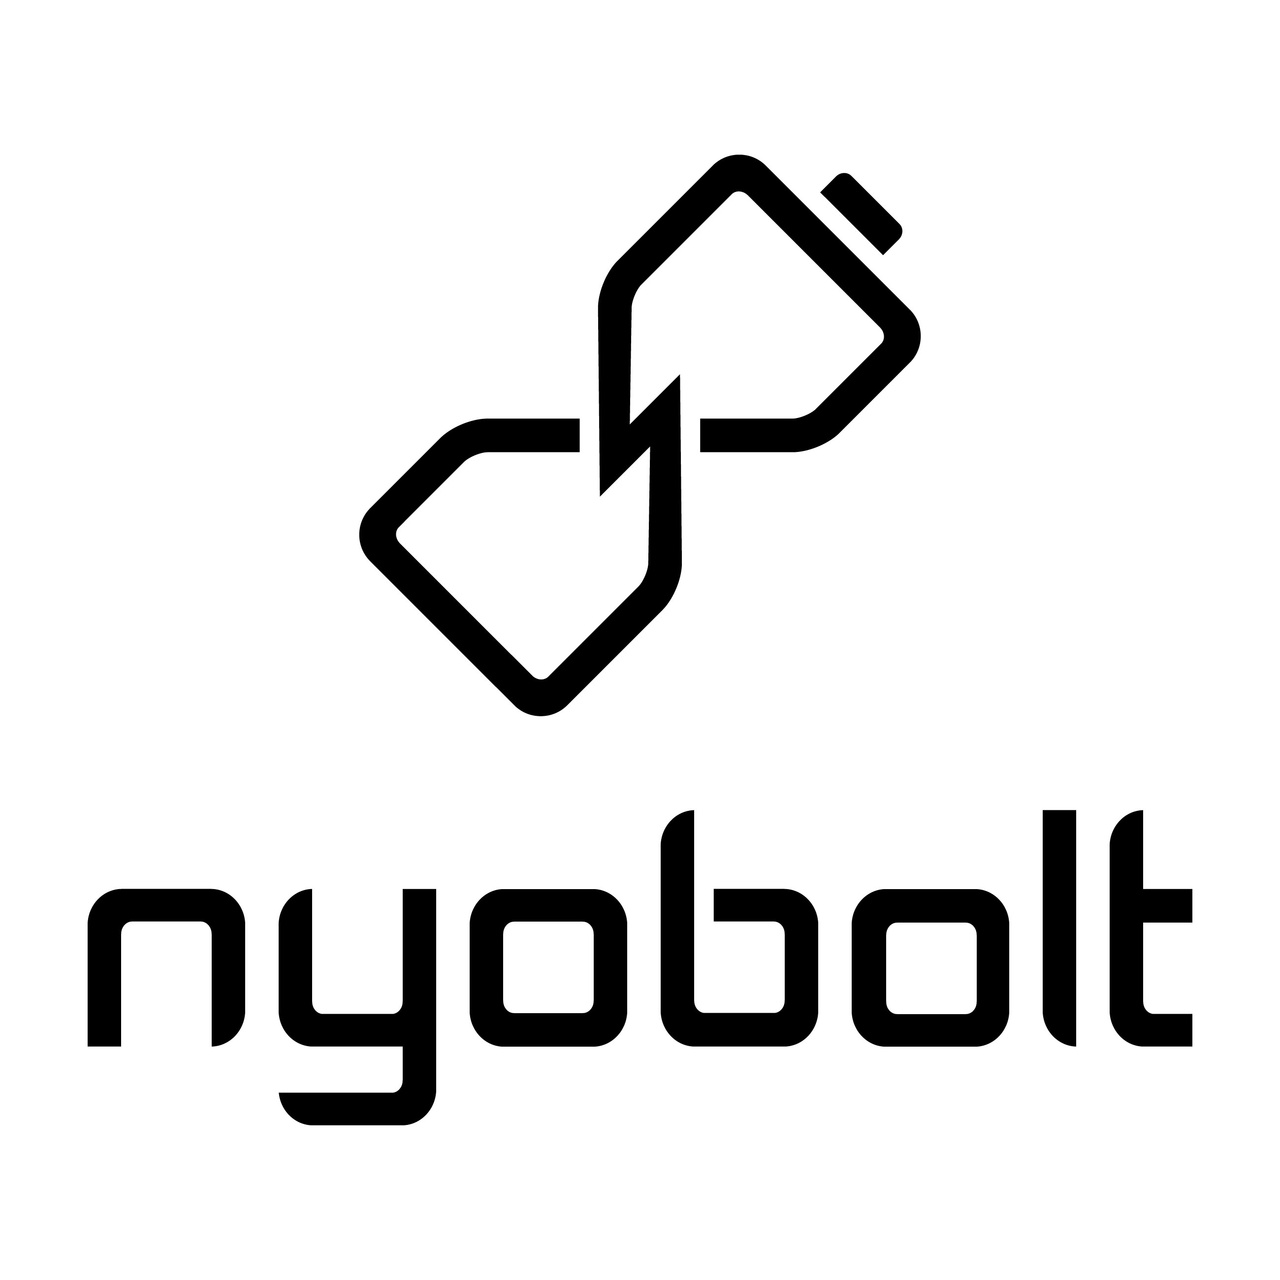 Nyobolt becomes a regular member of CharIN